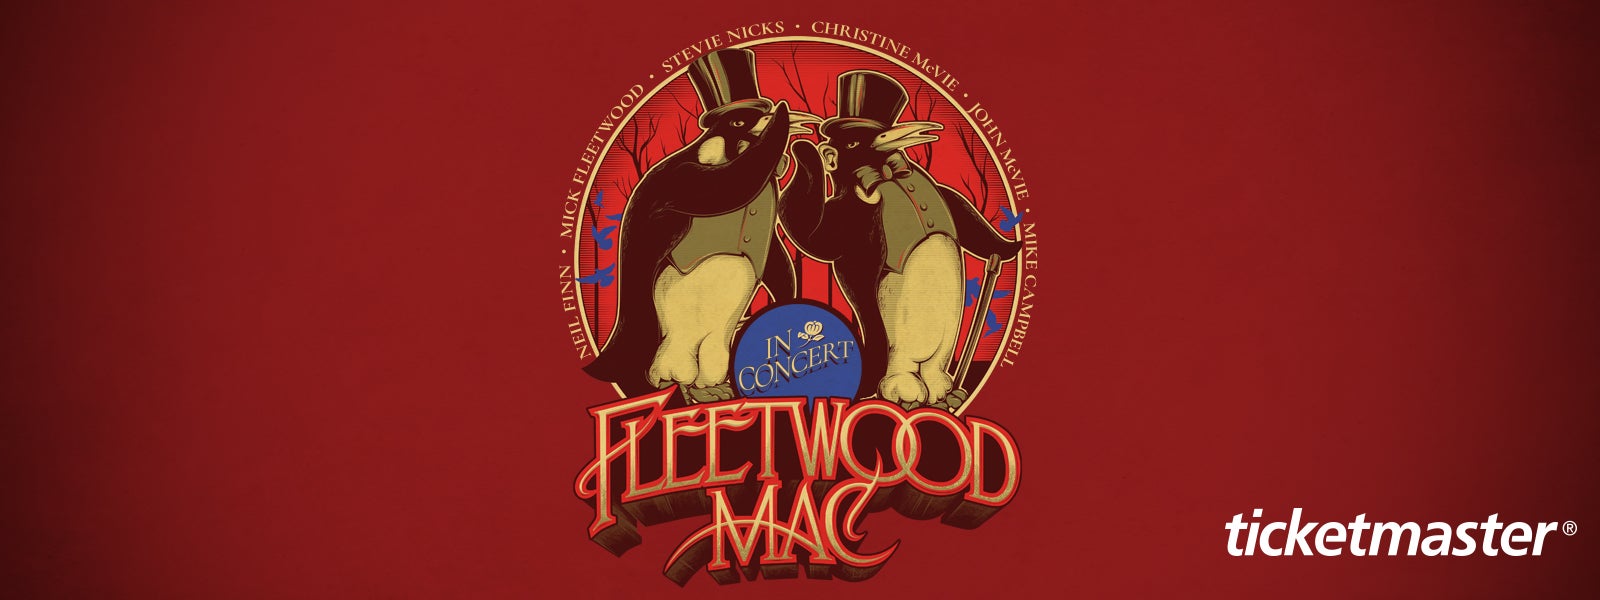 An Evening With Fleetwood Mac